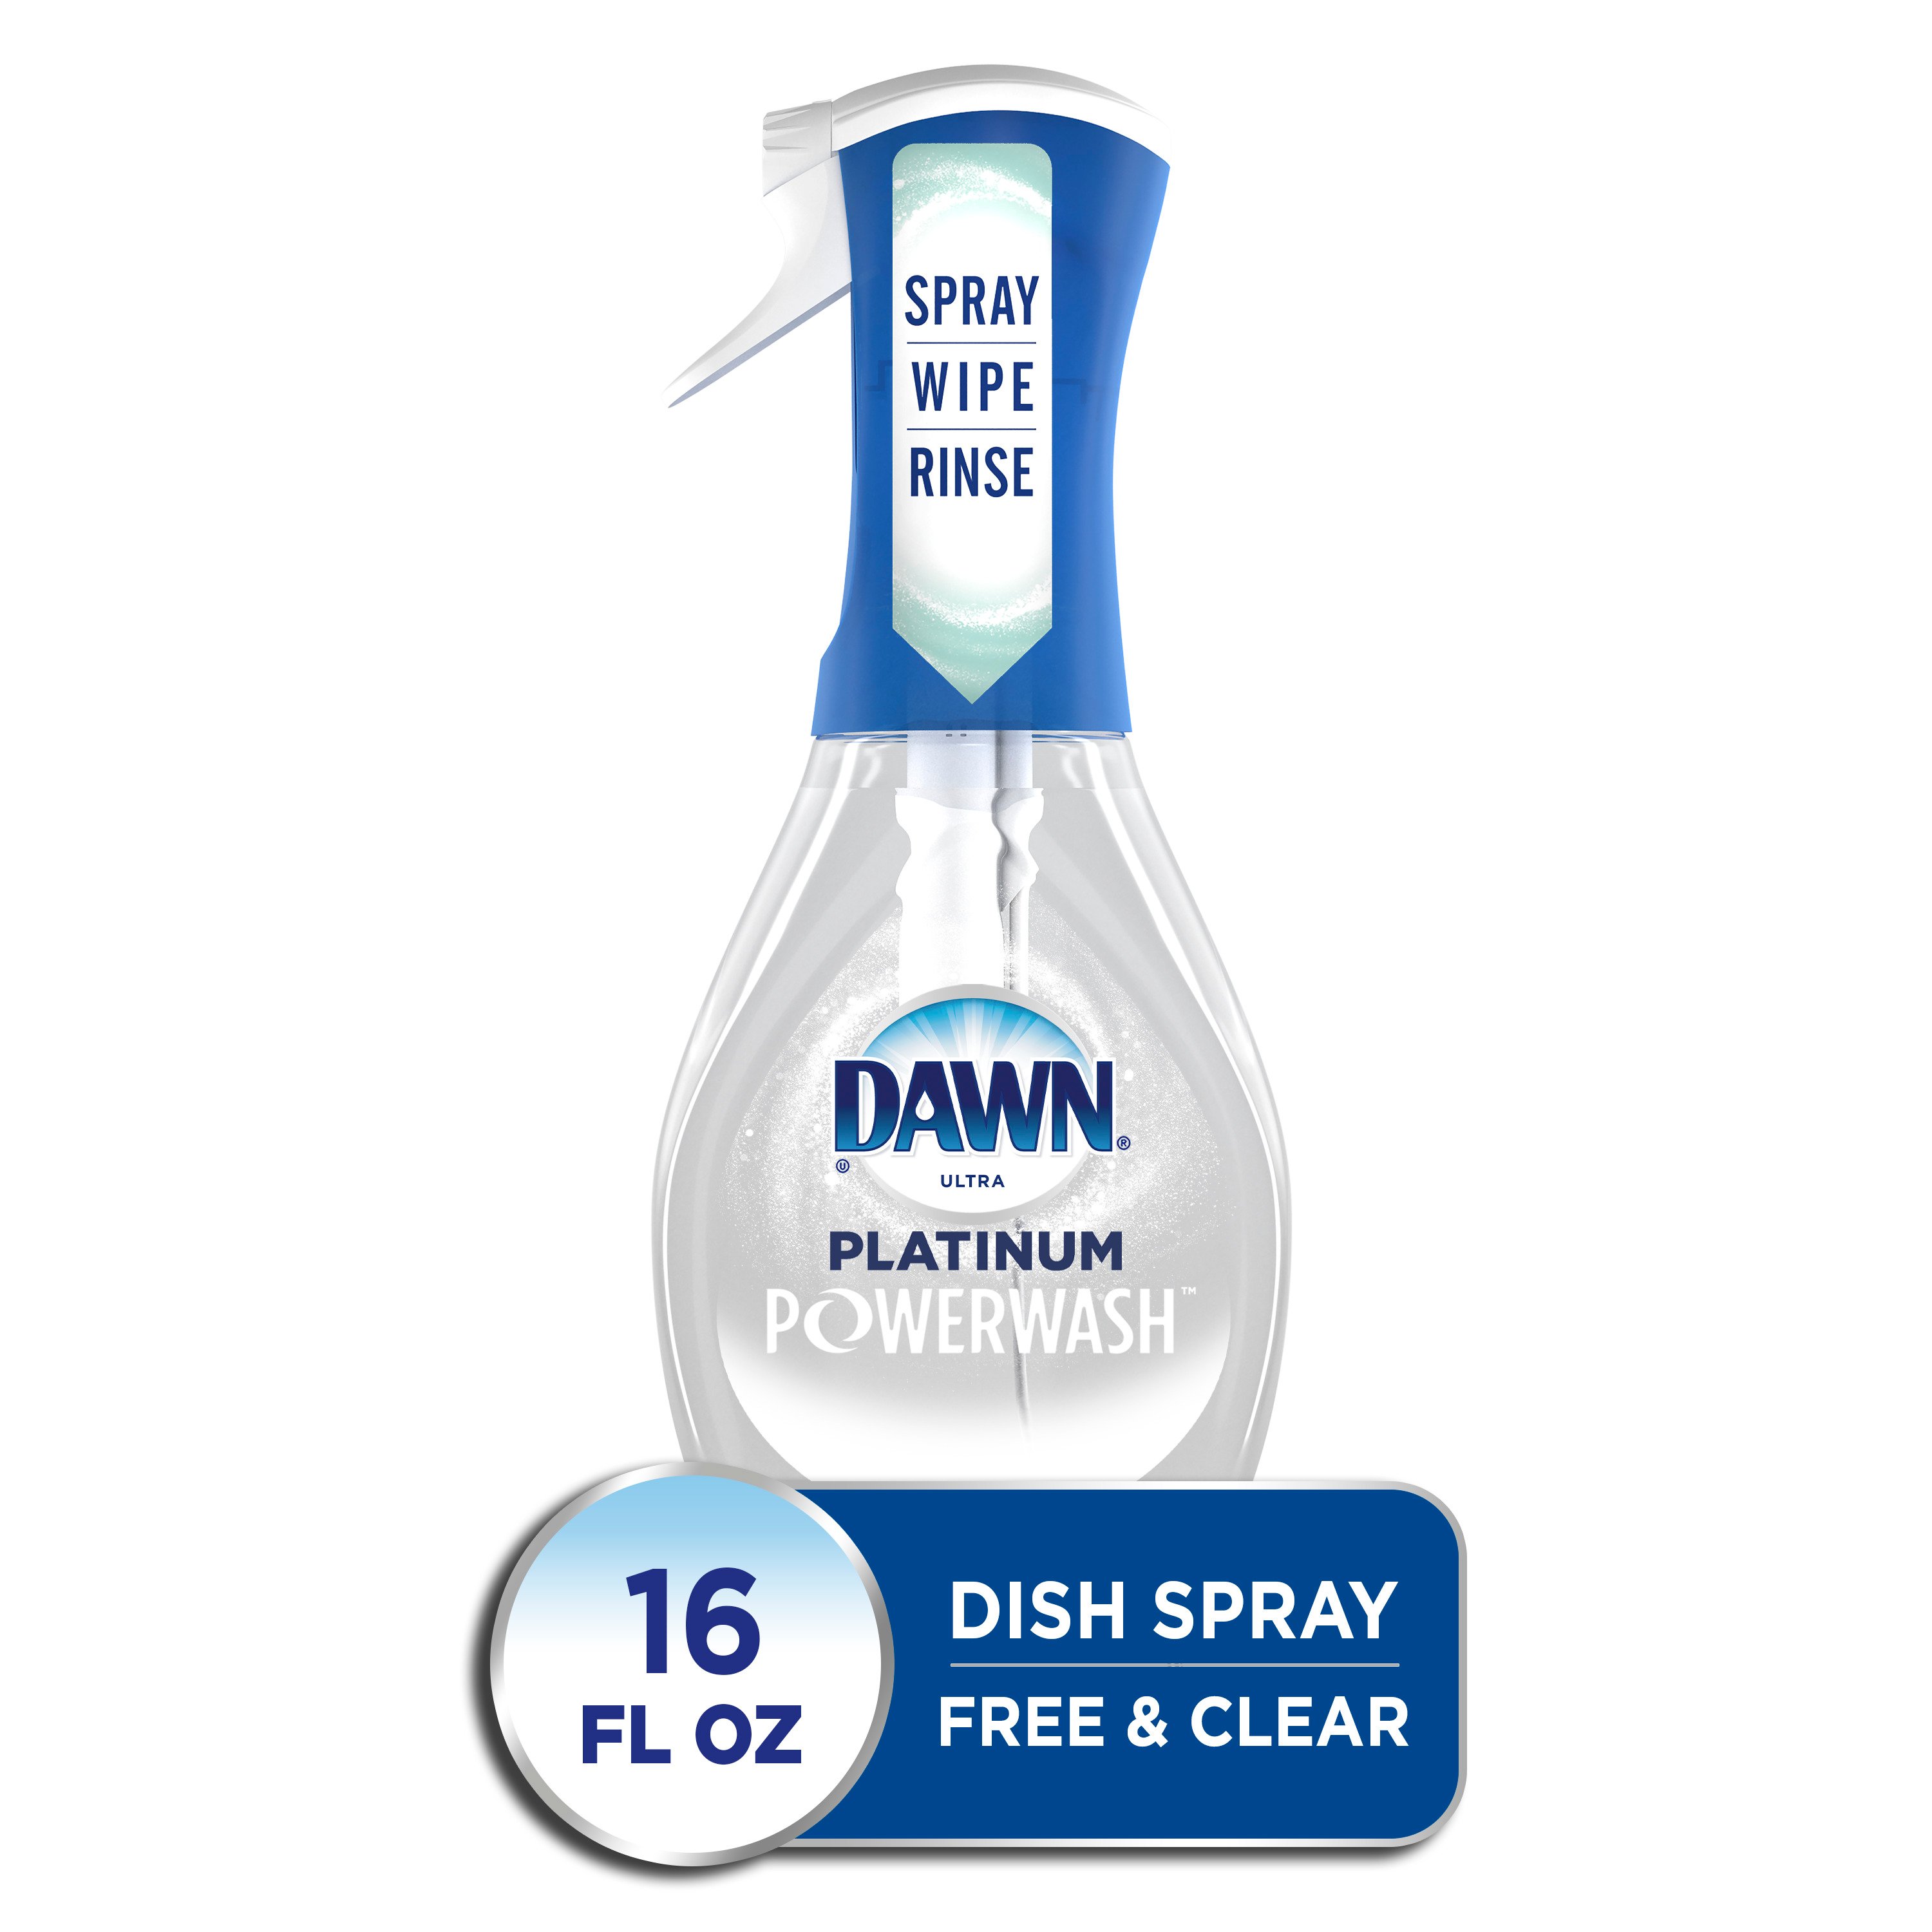 Dawn Platinum Power wash Dish Spray, Dish Soap, Lemon Refill, 16 fl oz